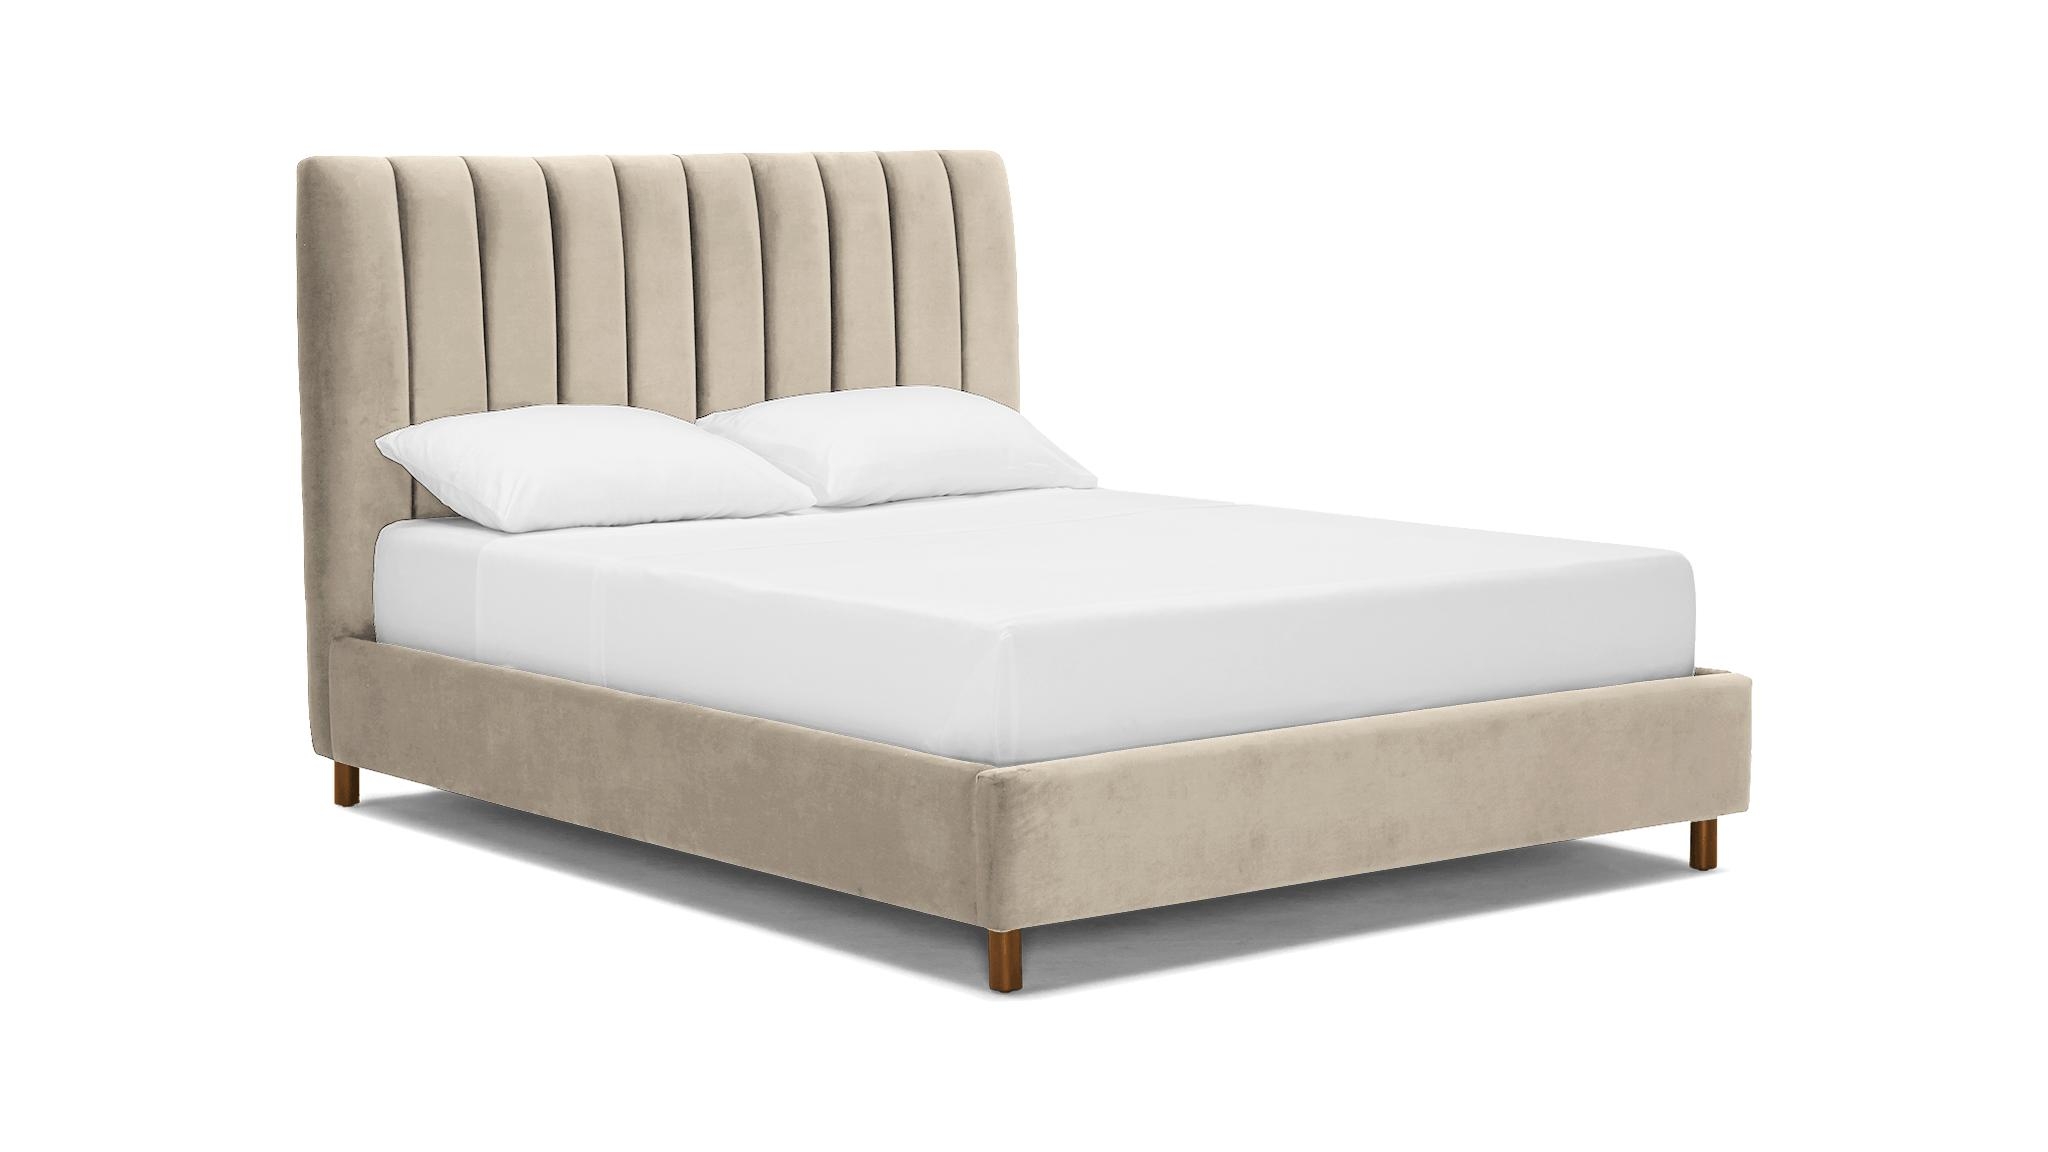 Beige/White Lotta Mid Century Modern Bed - Cody Sandstone - Mocha - Queen - Image 1